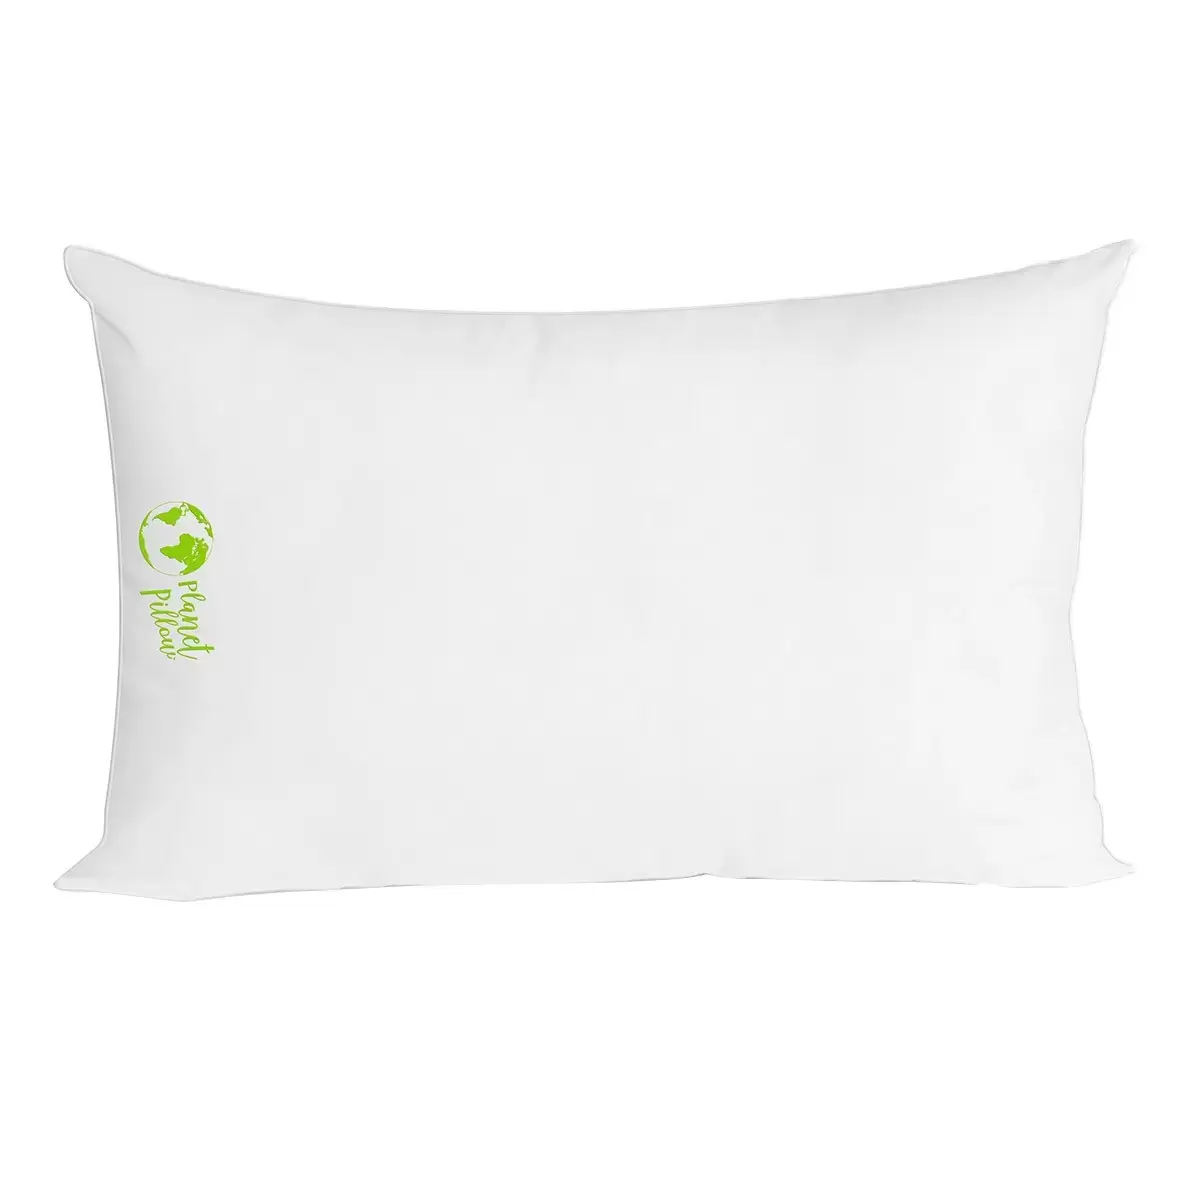 Planet Pillow 環保有機棉布套枕2入 51 公分 x 71 公分